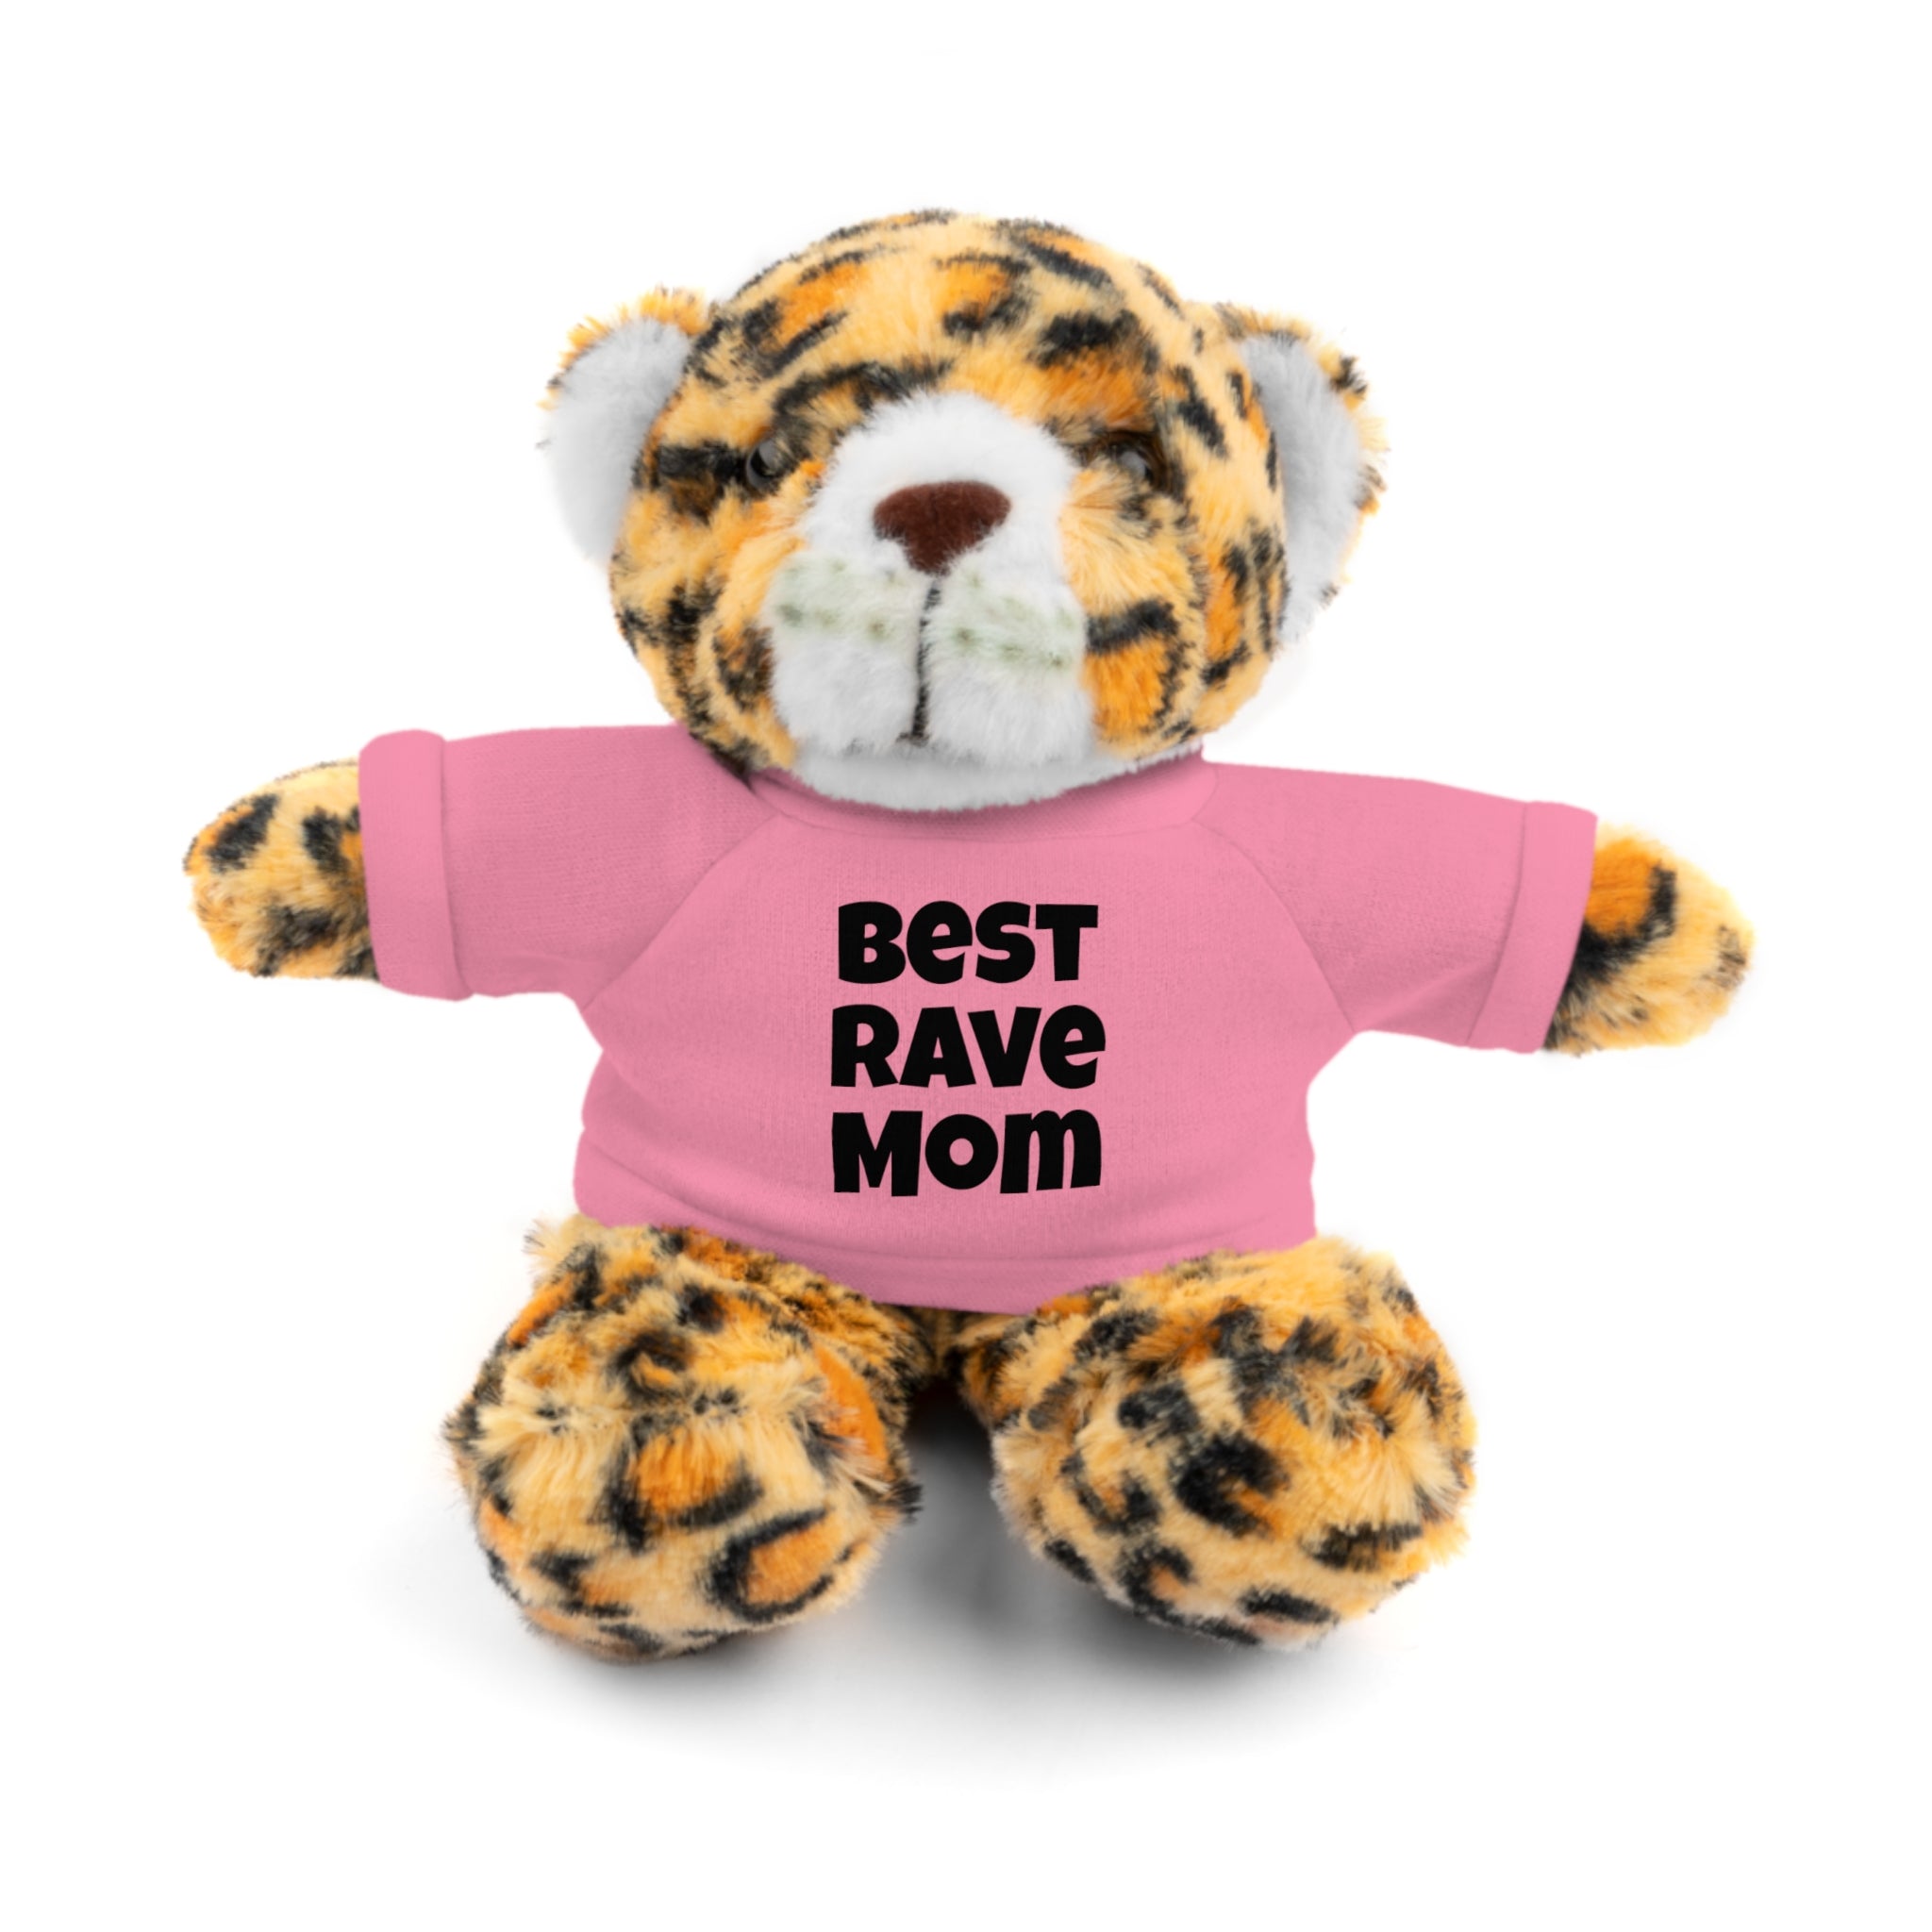 Best Rave Mom Stuffed Animal with Tee